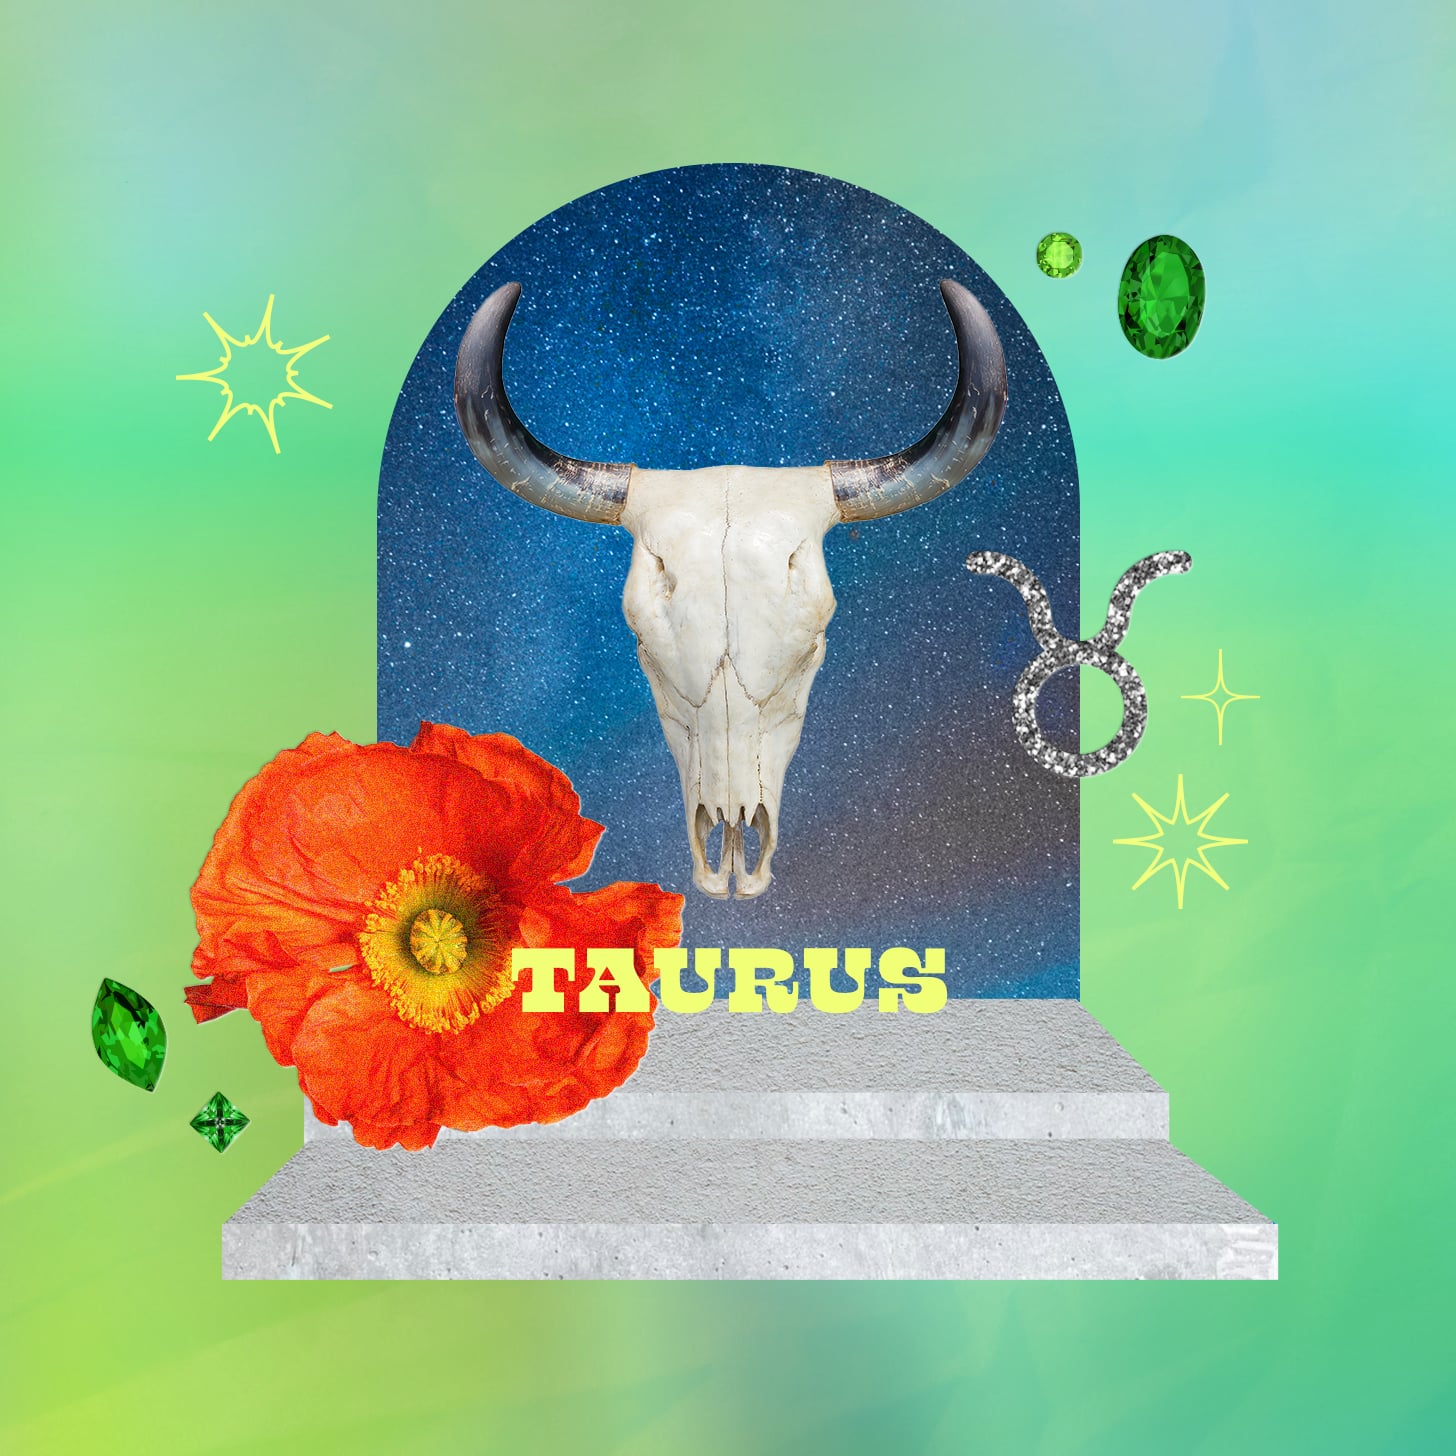 Taurus weekly horoscope for July 10, 2022